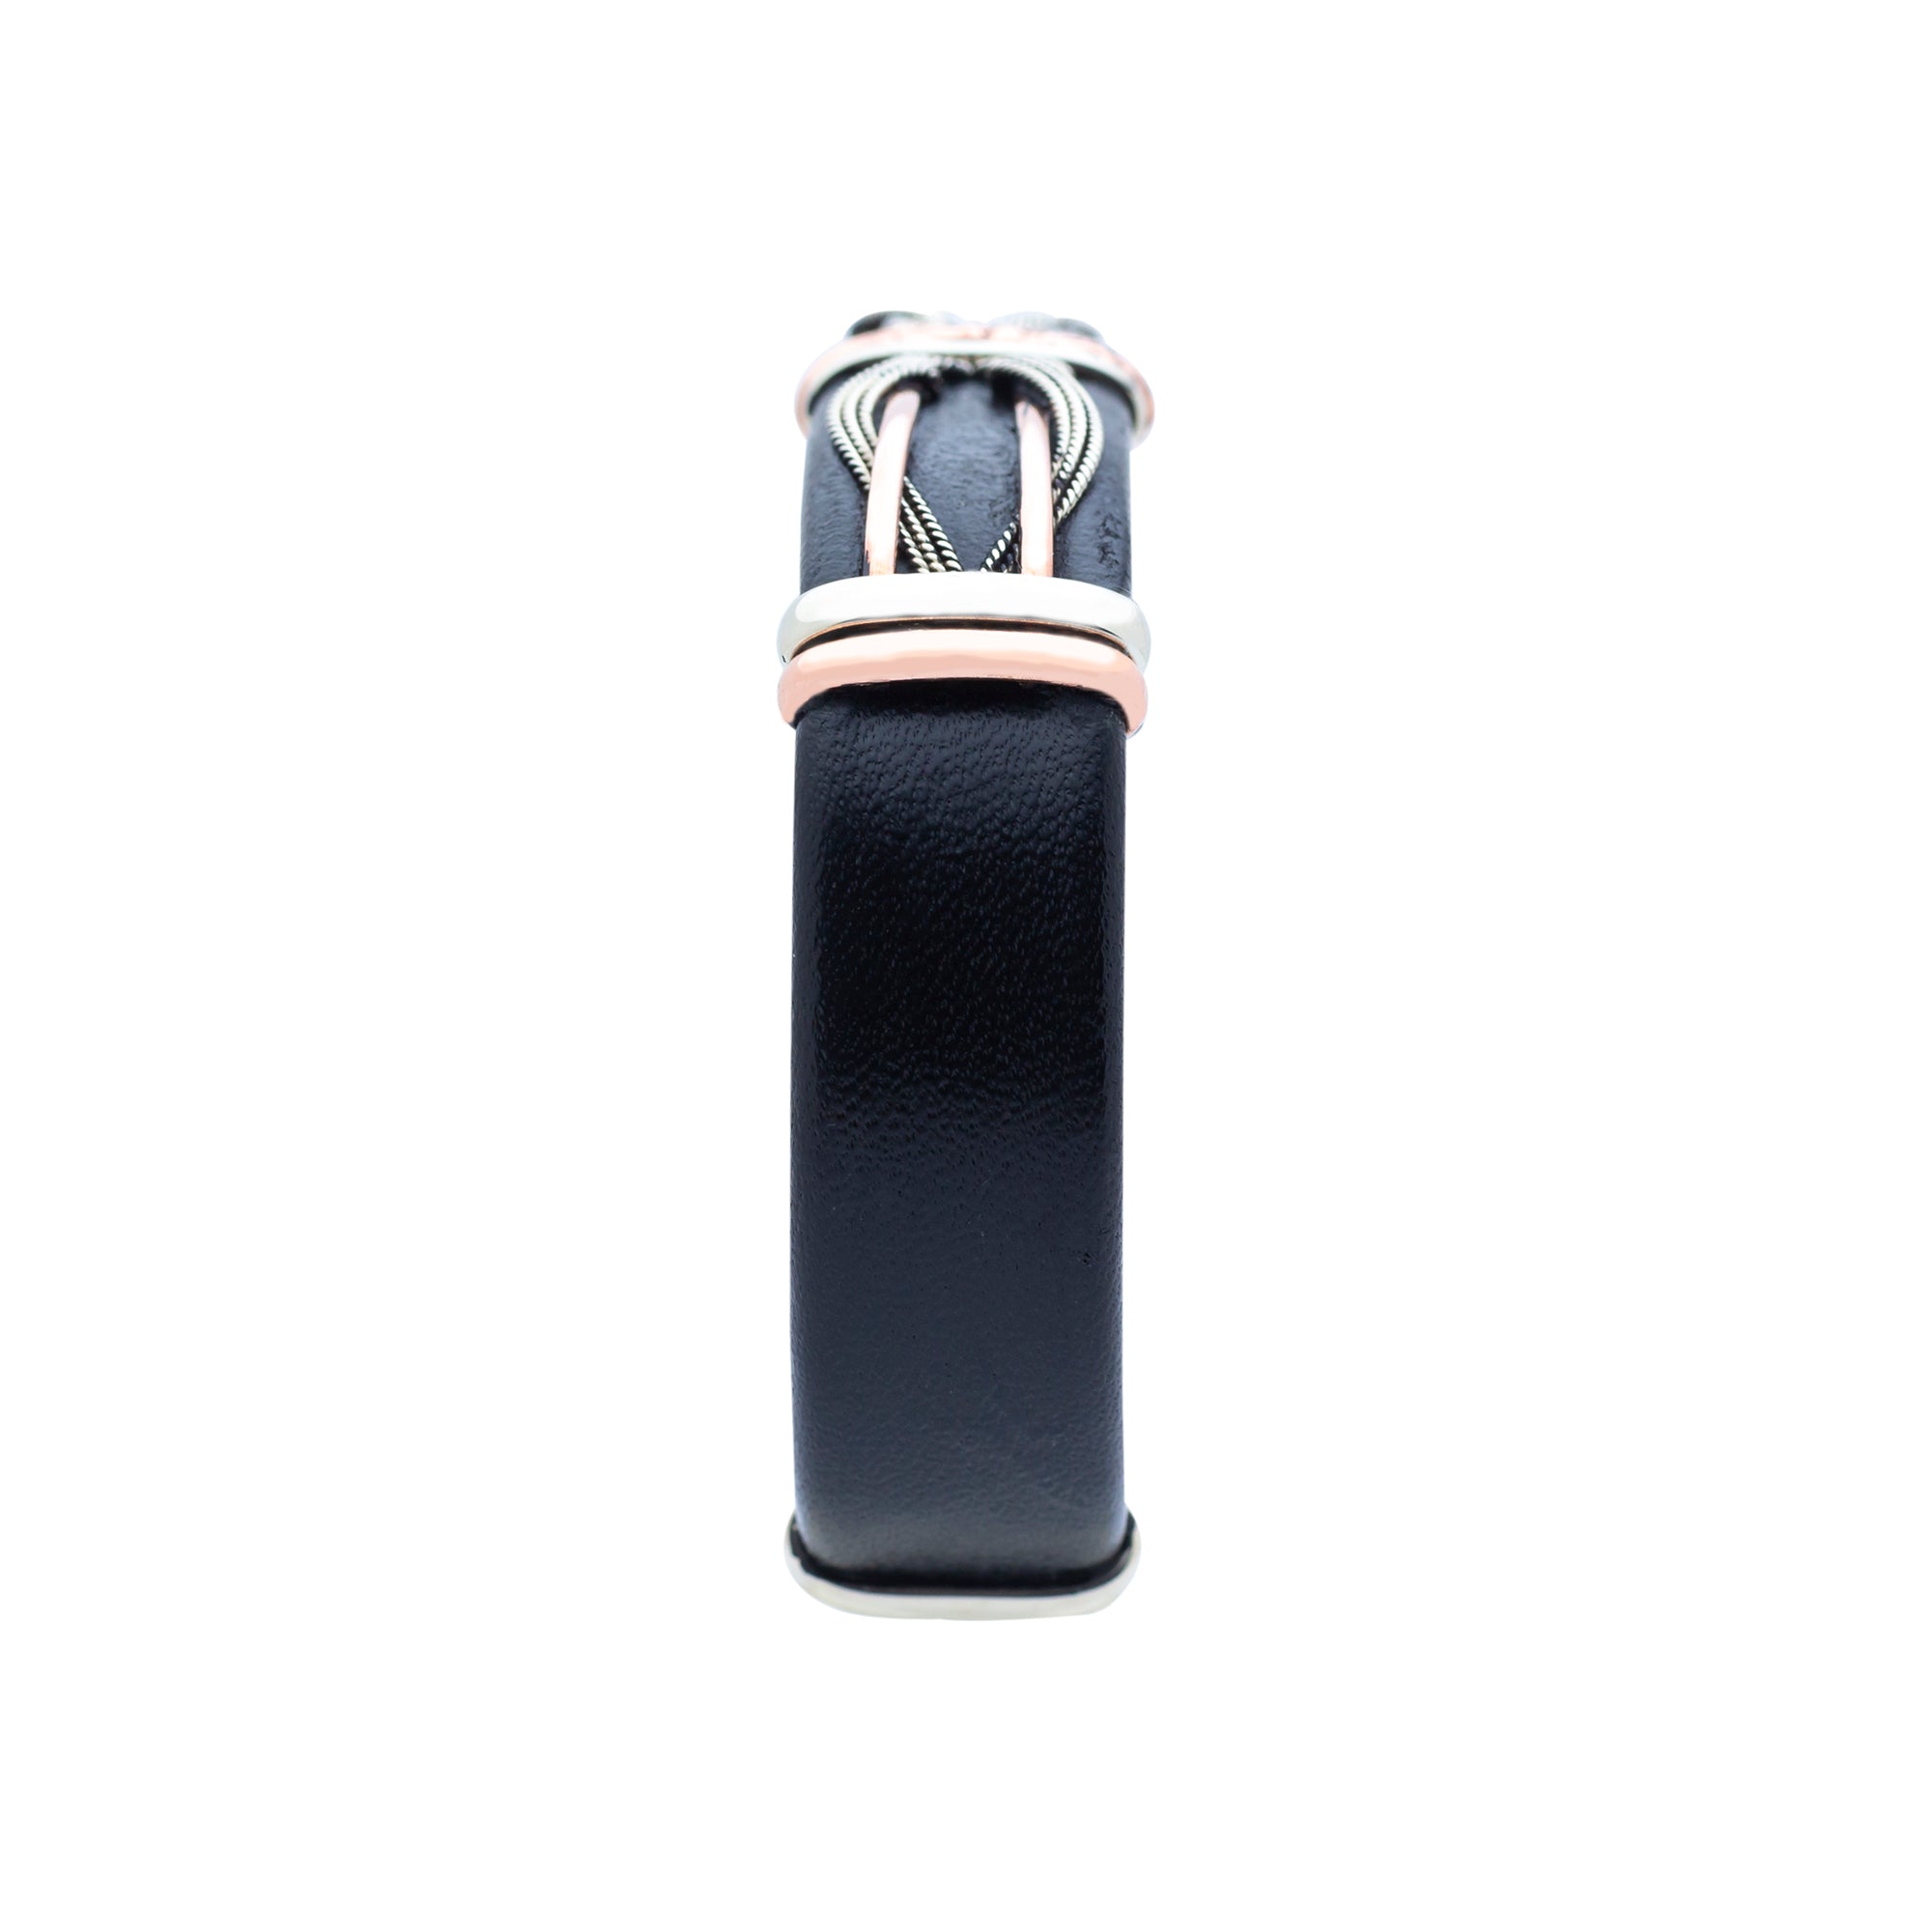 Men's Leather Bracelet BR.ULB.0201 - Handcrafted by HPSilver, LLC.